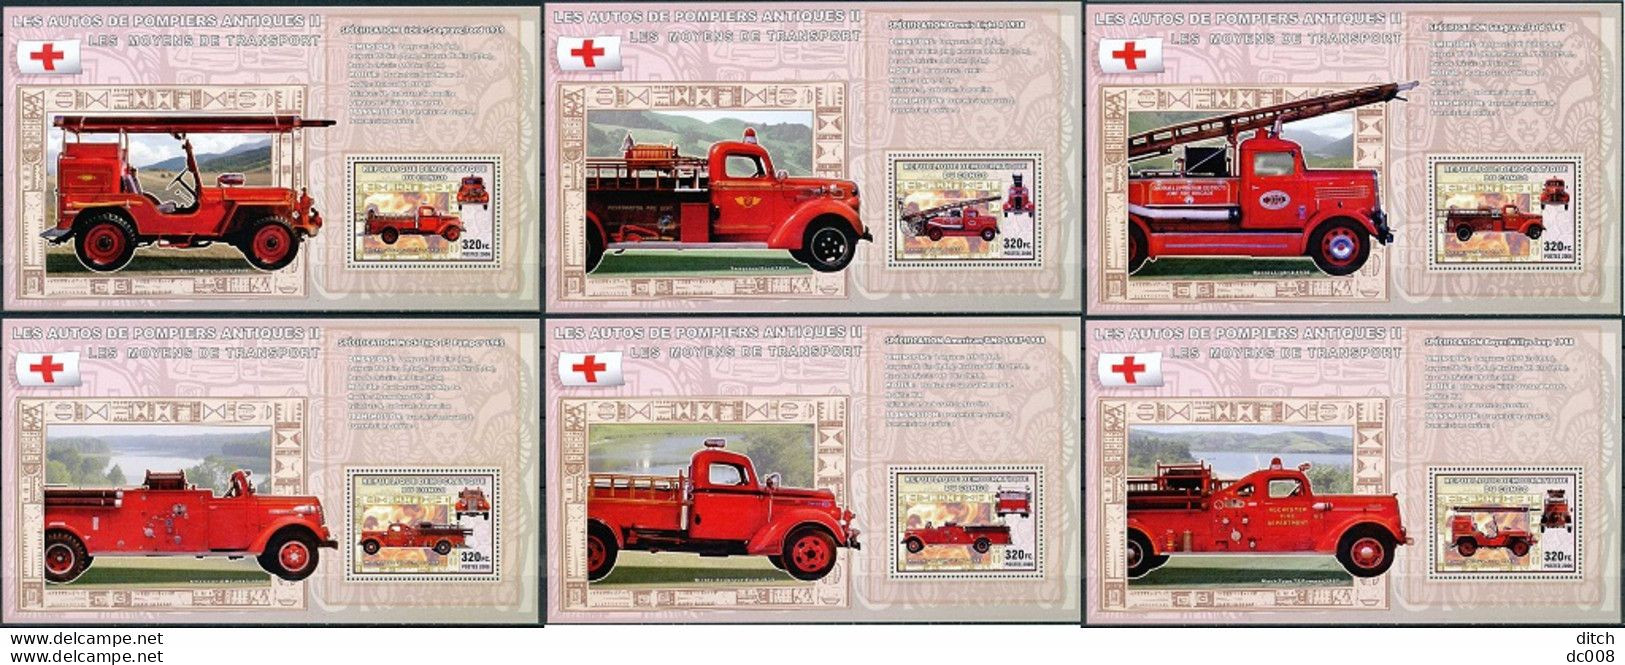 2006 Les Autos De Pompiers Antiques II - Complet-volledig 7 Blocs - Ongebruikt